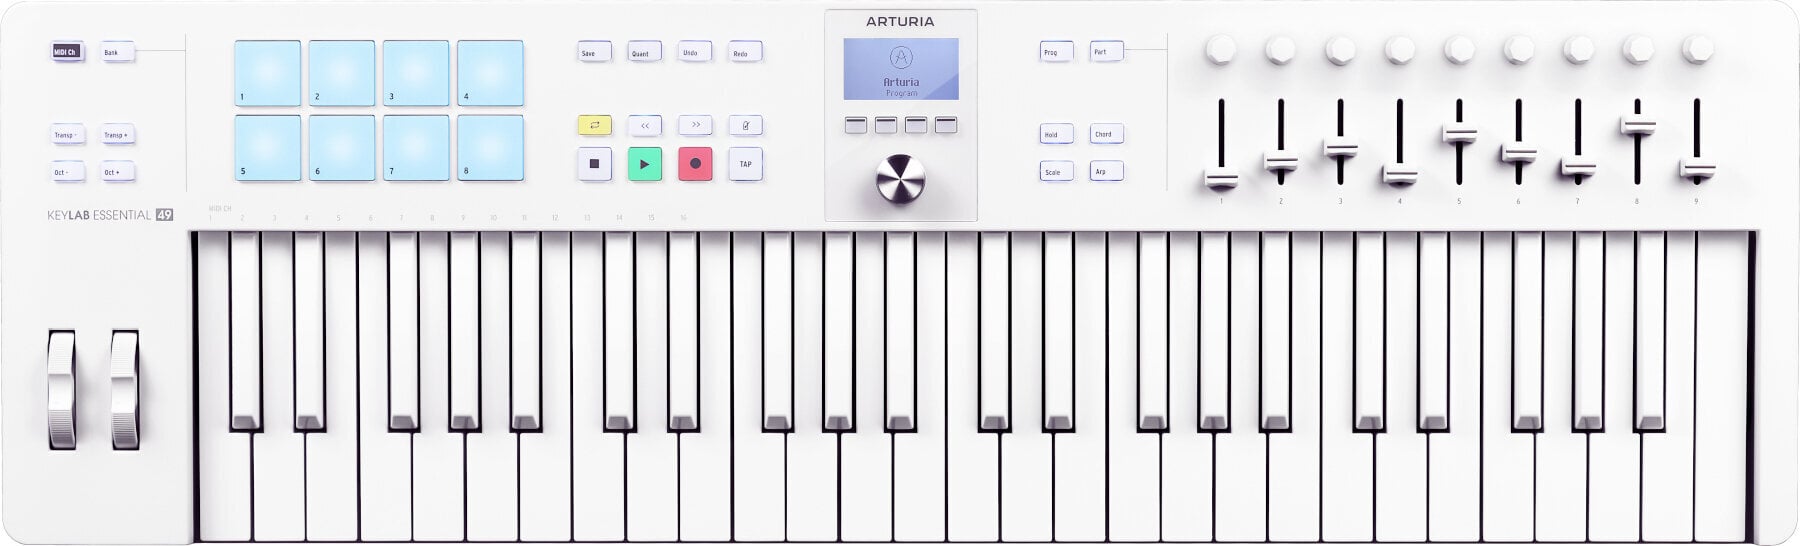 MIDI sintesajzer Arturia KeyLab Essential 49 mk3